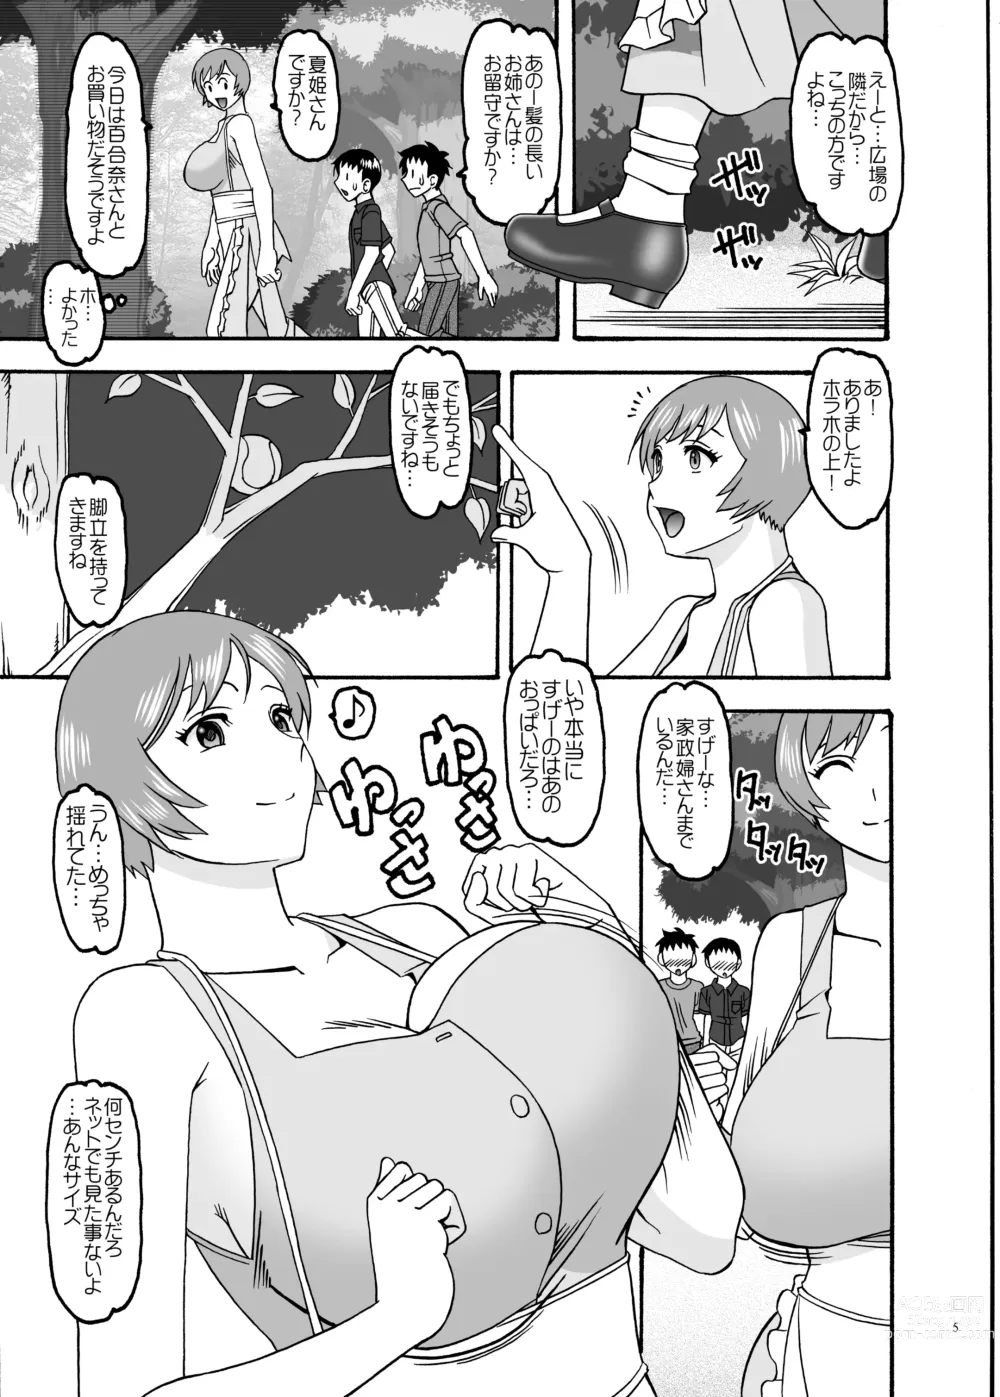 Page 5 of doujinshi Housekeeper and Shota